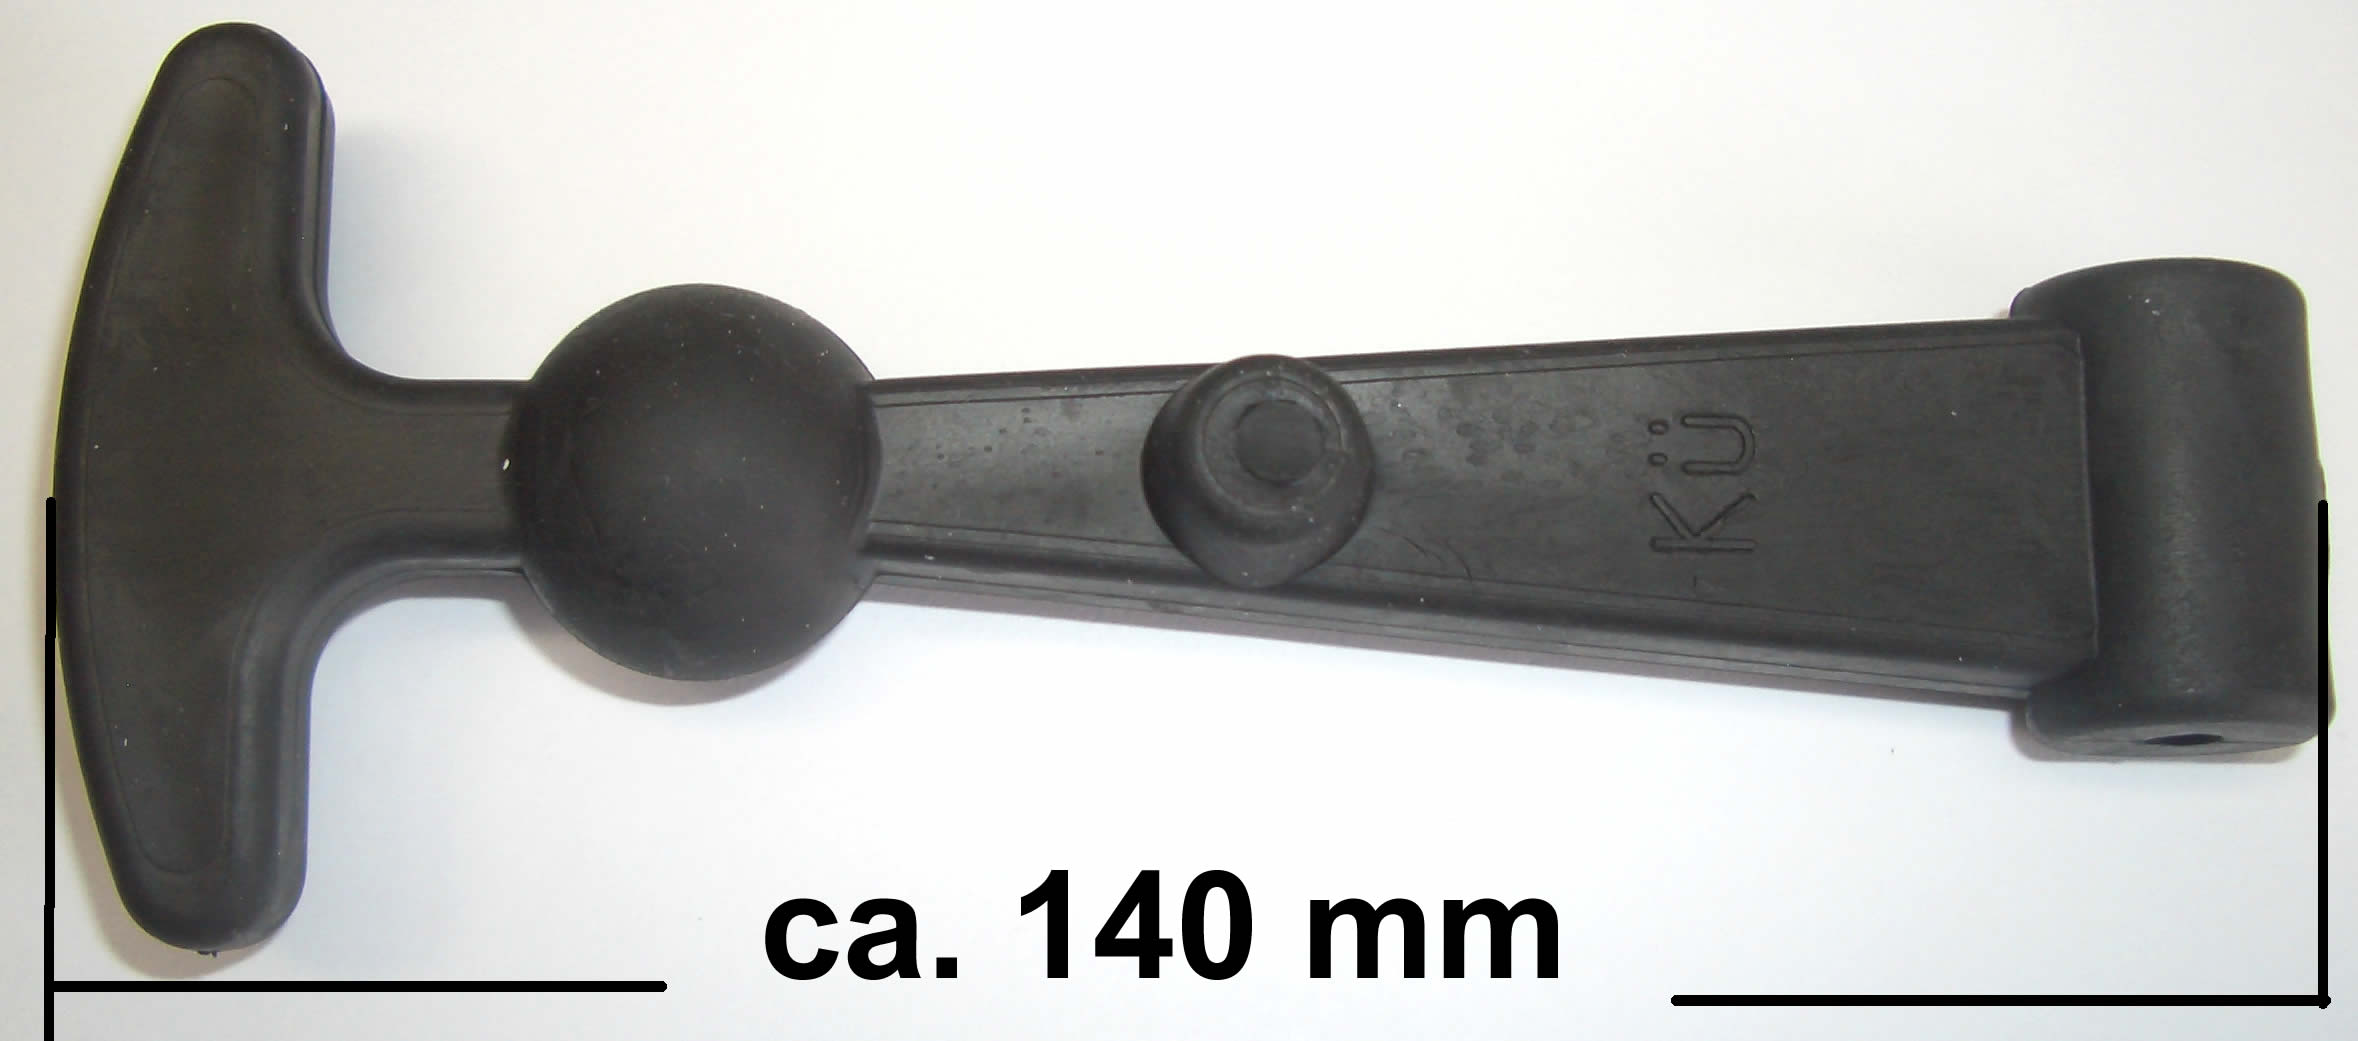 Oldtimer Jehle - Haubenhalter aus Gummi ca. 140 mm lang